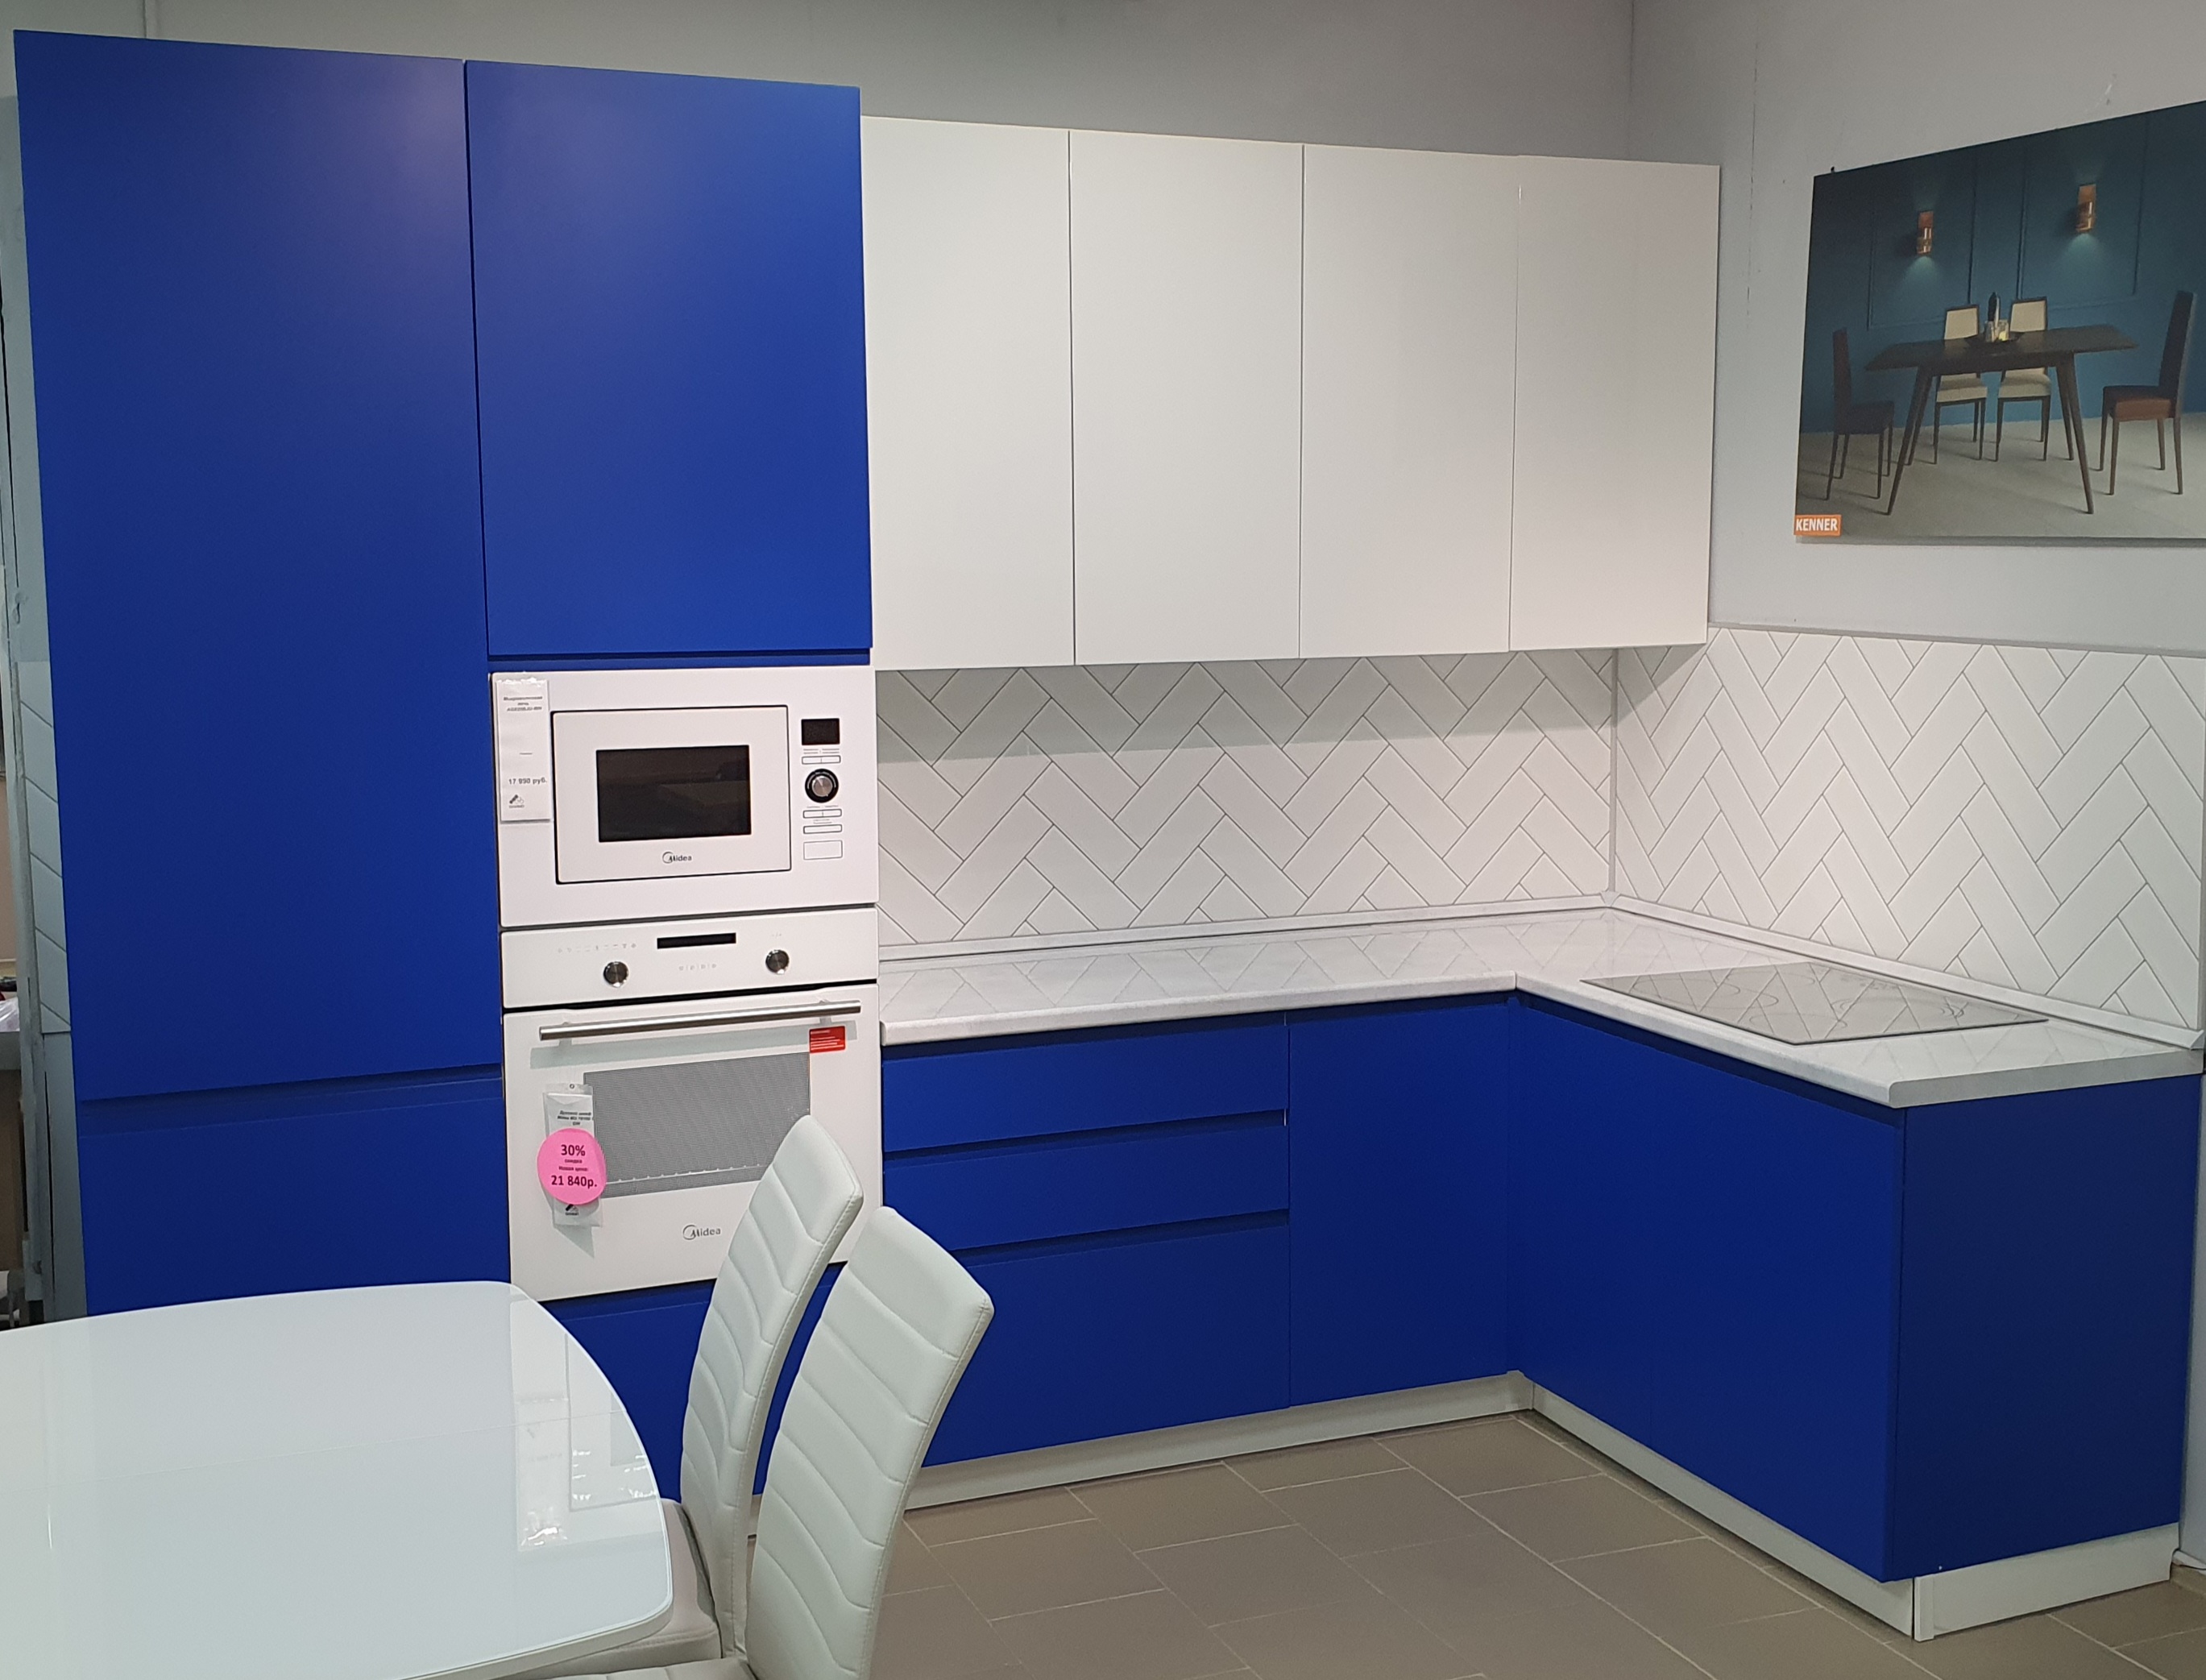 Кухня МК-4817 RAL 5005 синий матовый, RAL 9003 белый глянец/коперфильд серый (3683)